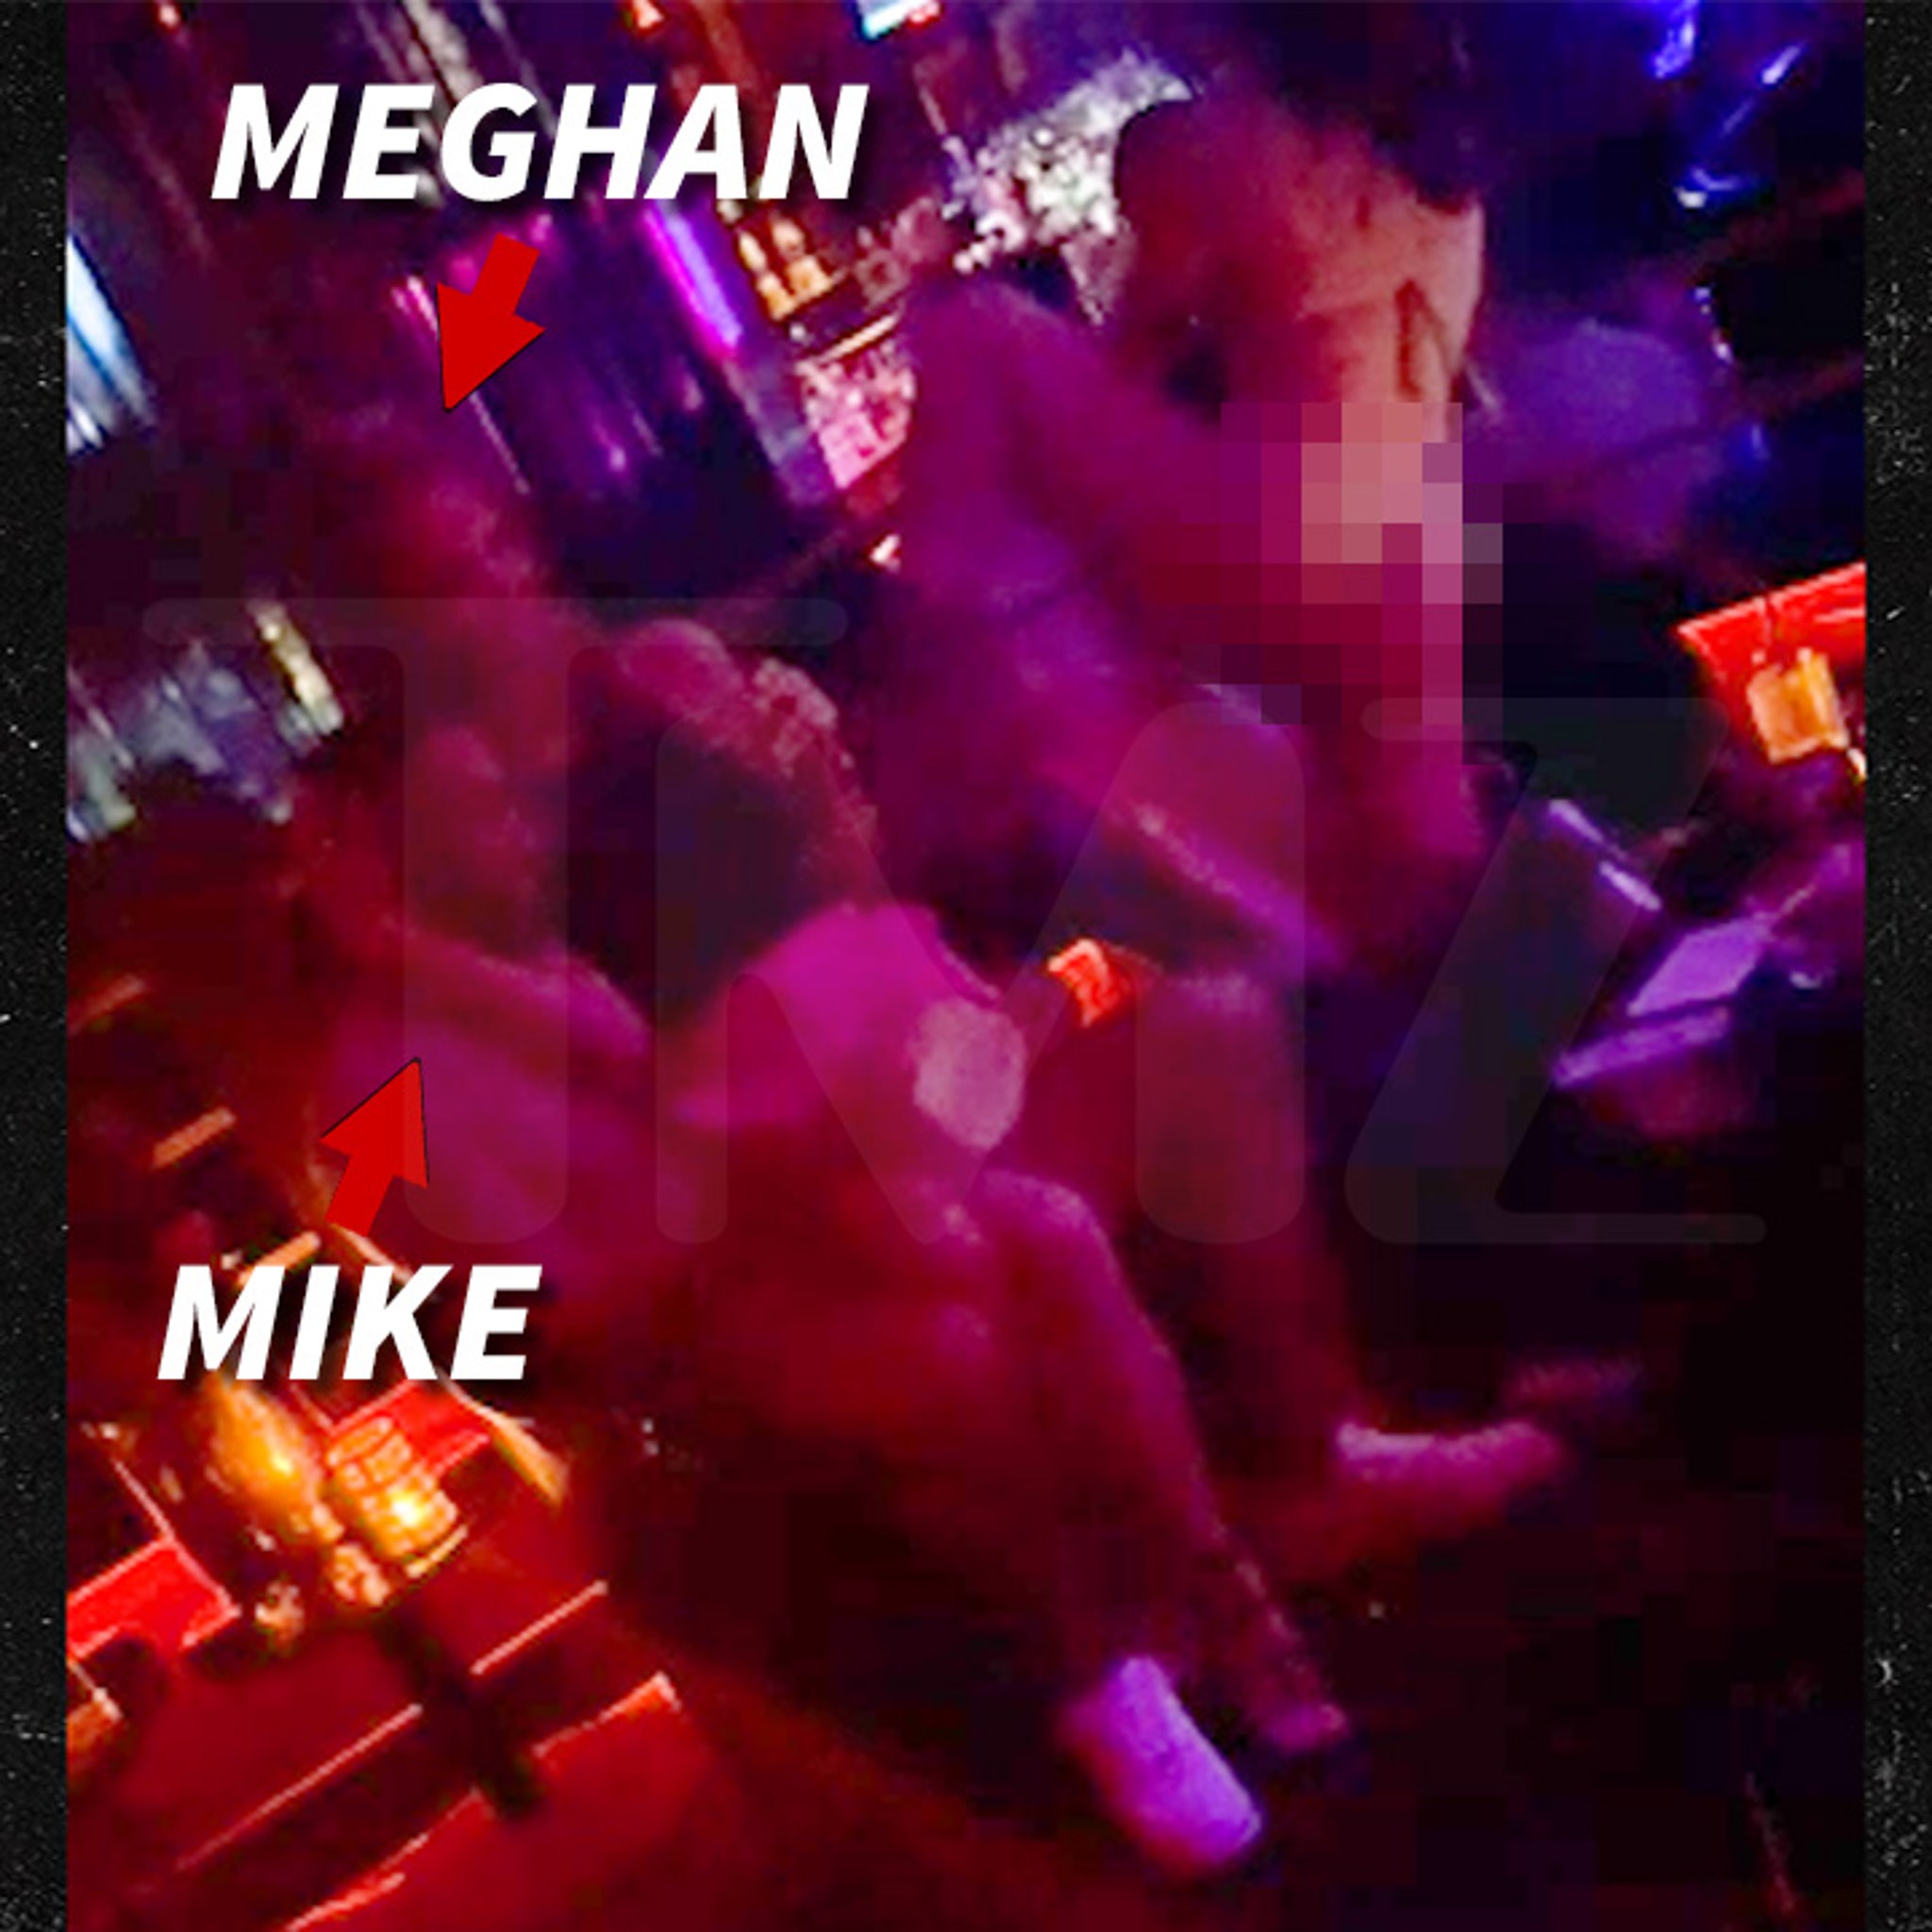 RHOC Meghan King Gets Cozy With Bachelorette Star Mike Johnson At Strip Club pic